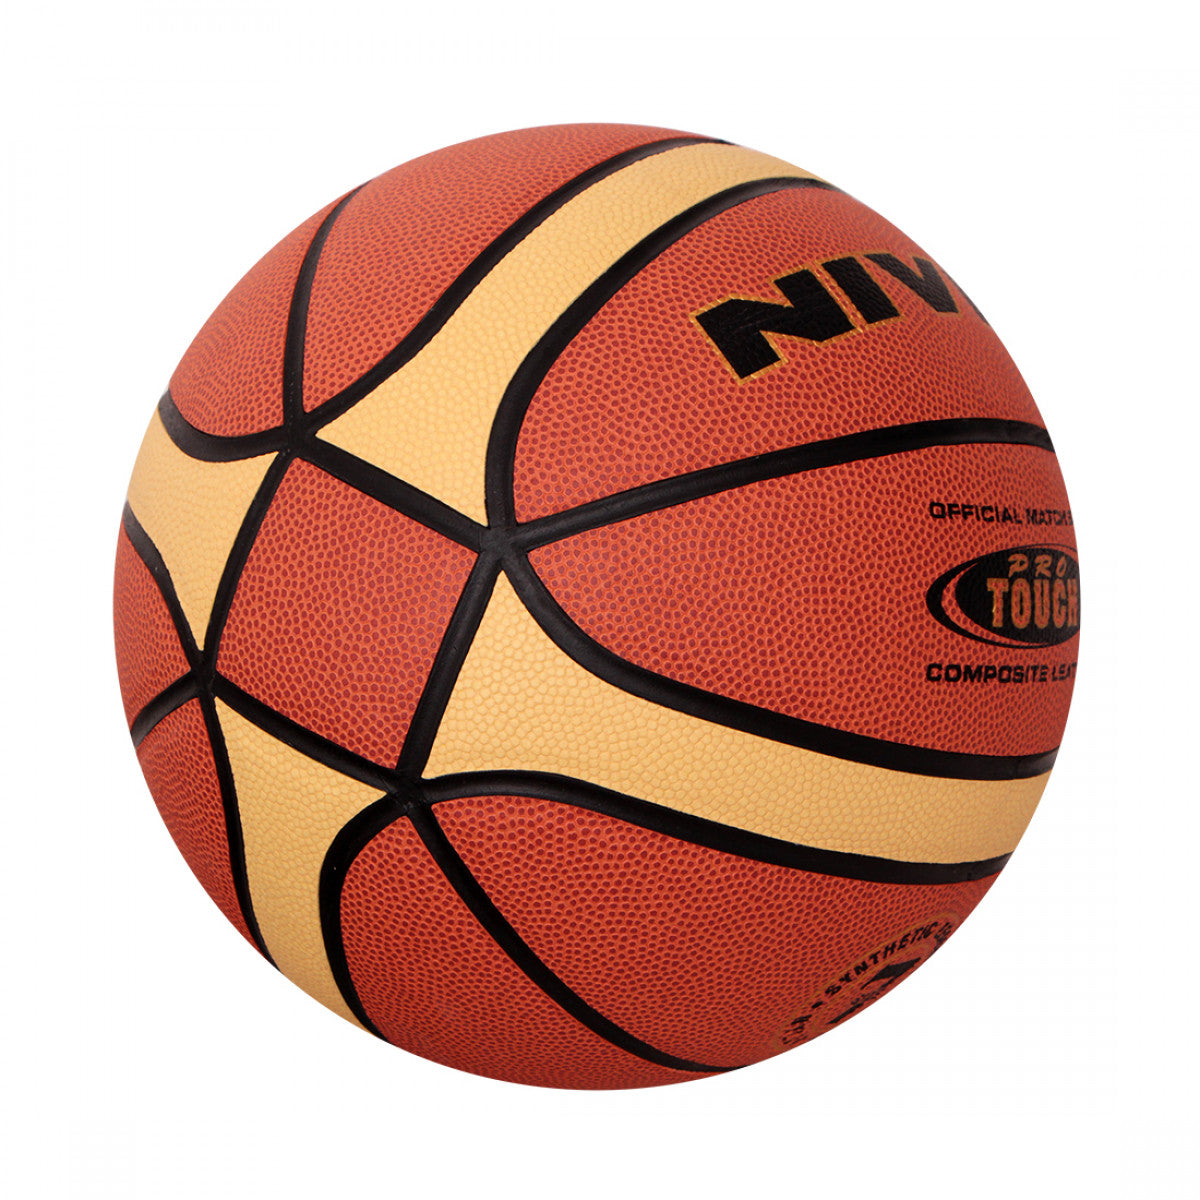 NIVIA Pro Touch Basketball Size - 7